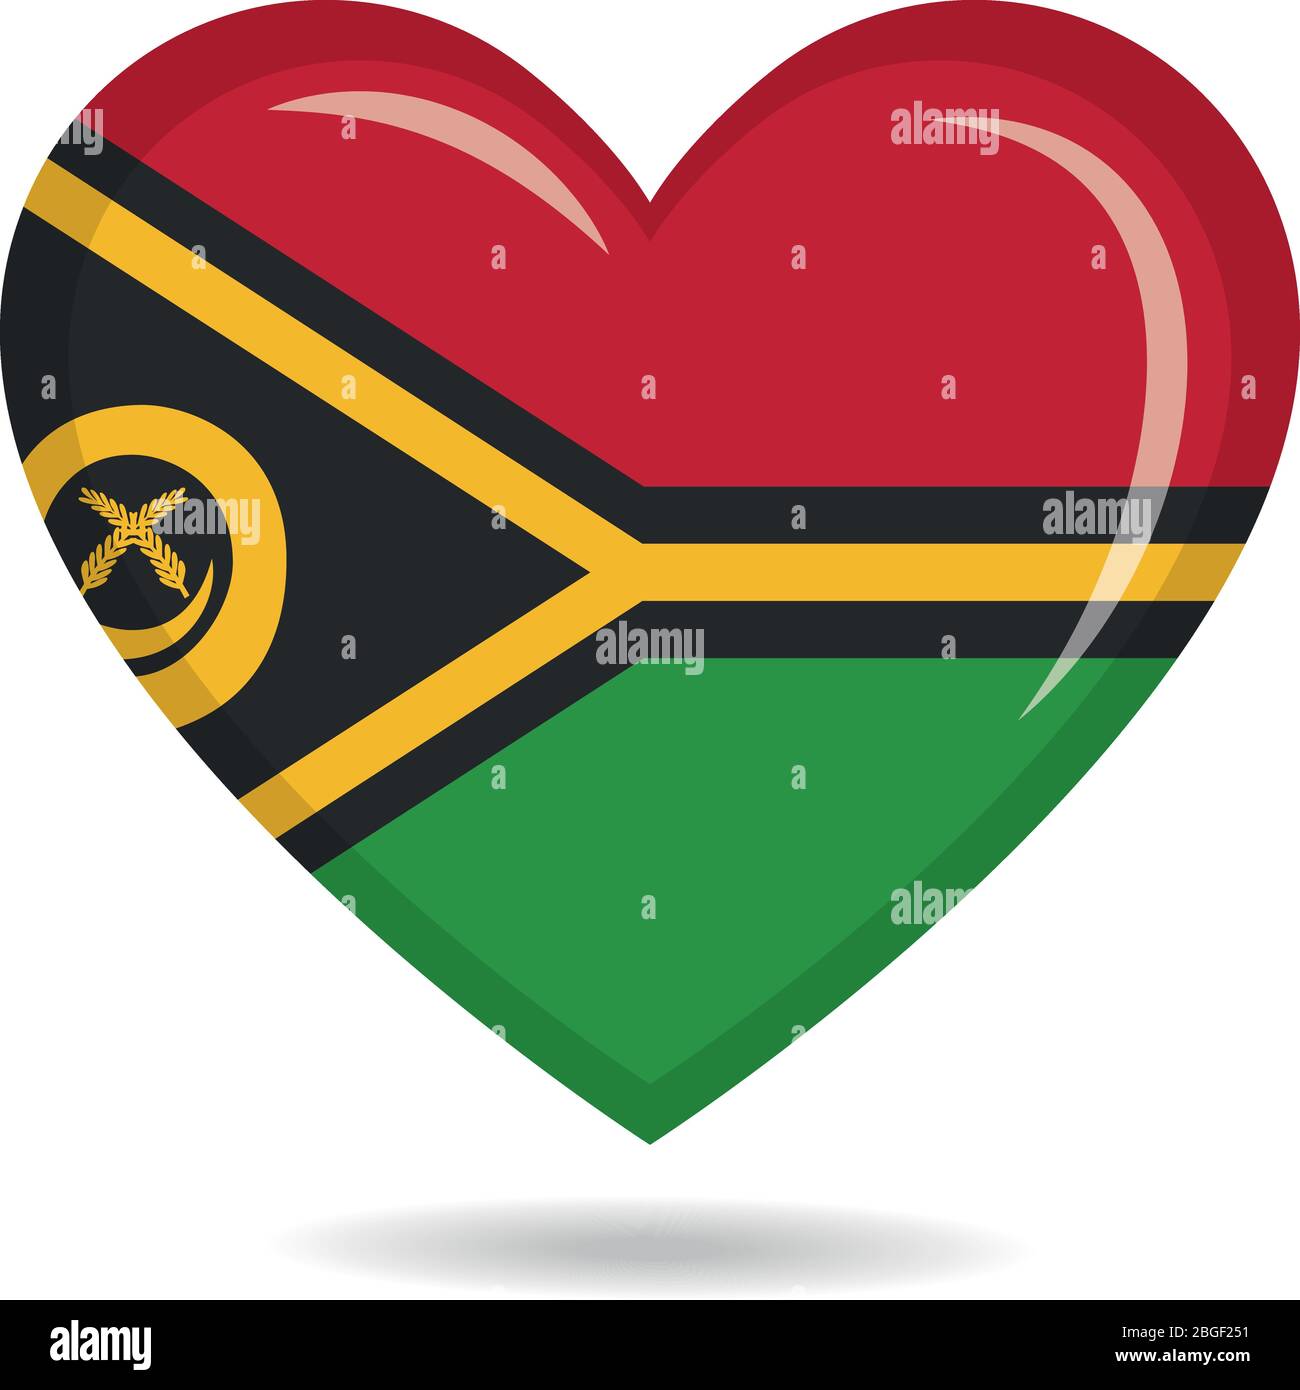 Vanuatu national flag in heart shape vector illustration Stock Vector